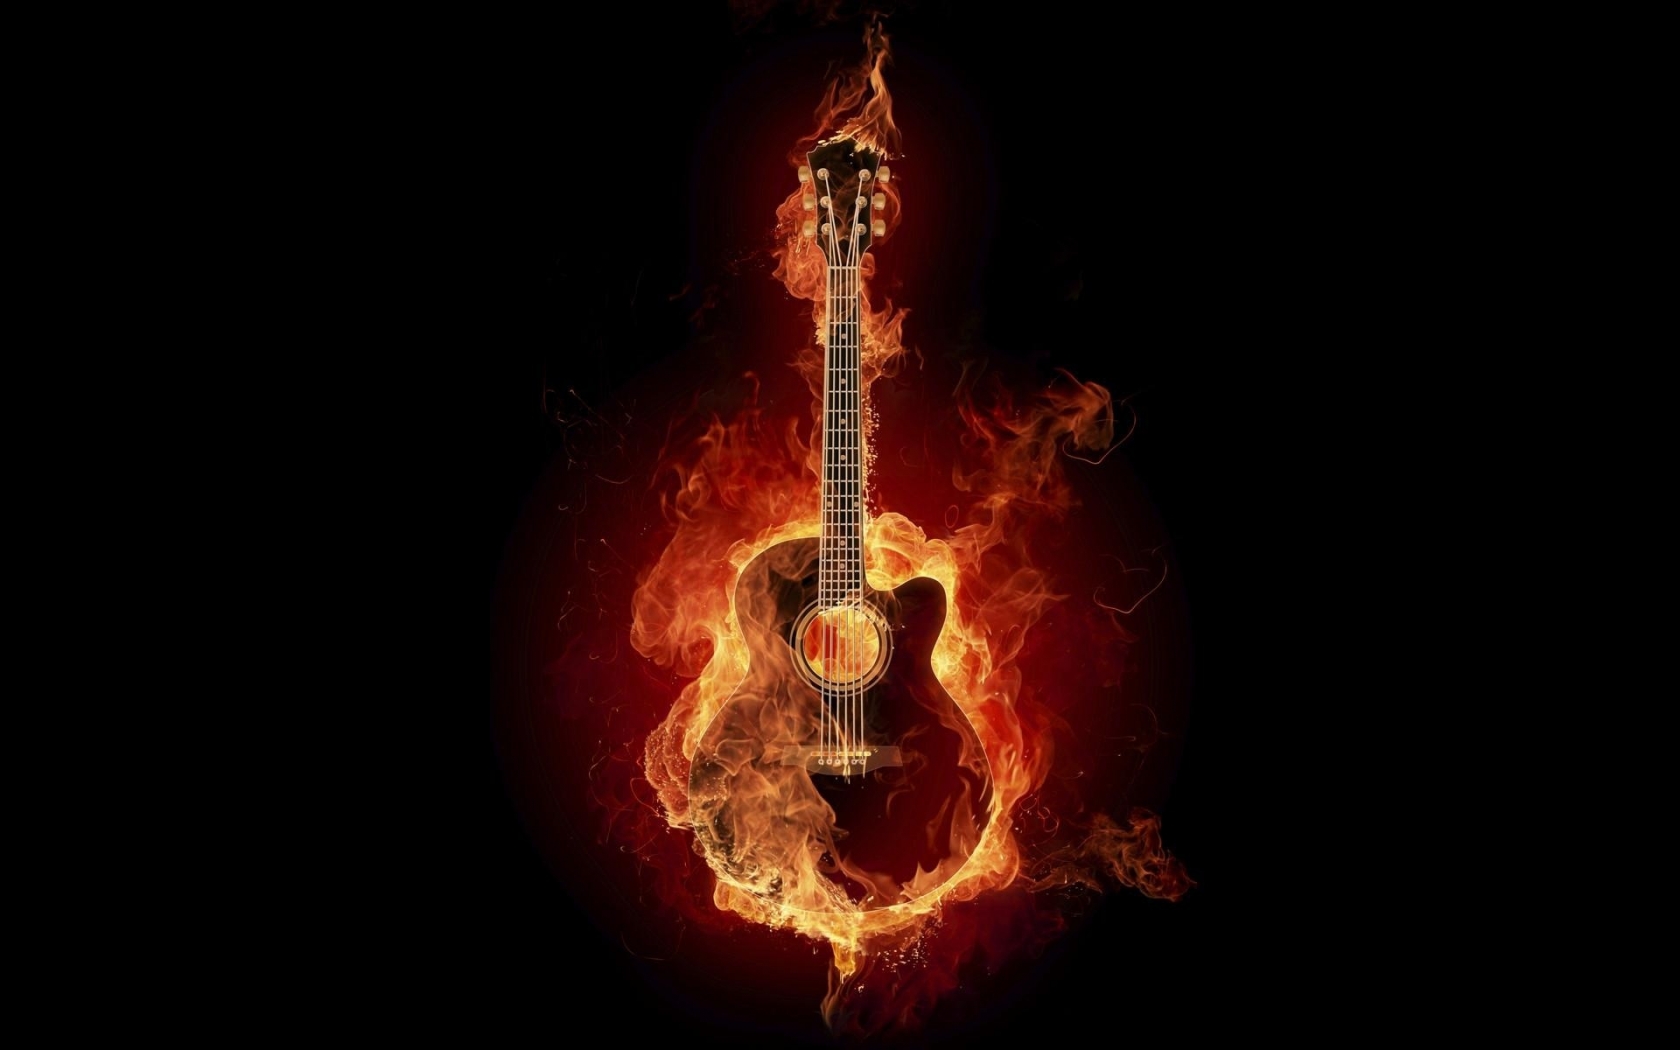 Great Fire Guitar for 1680 x 1050 widescreen resolution